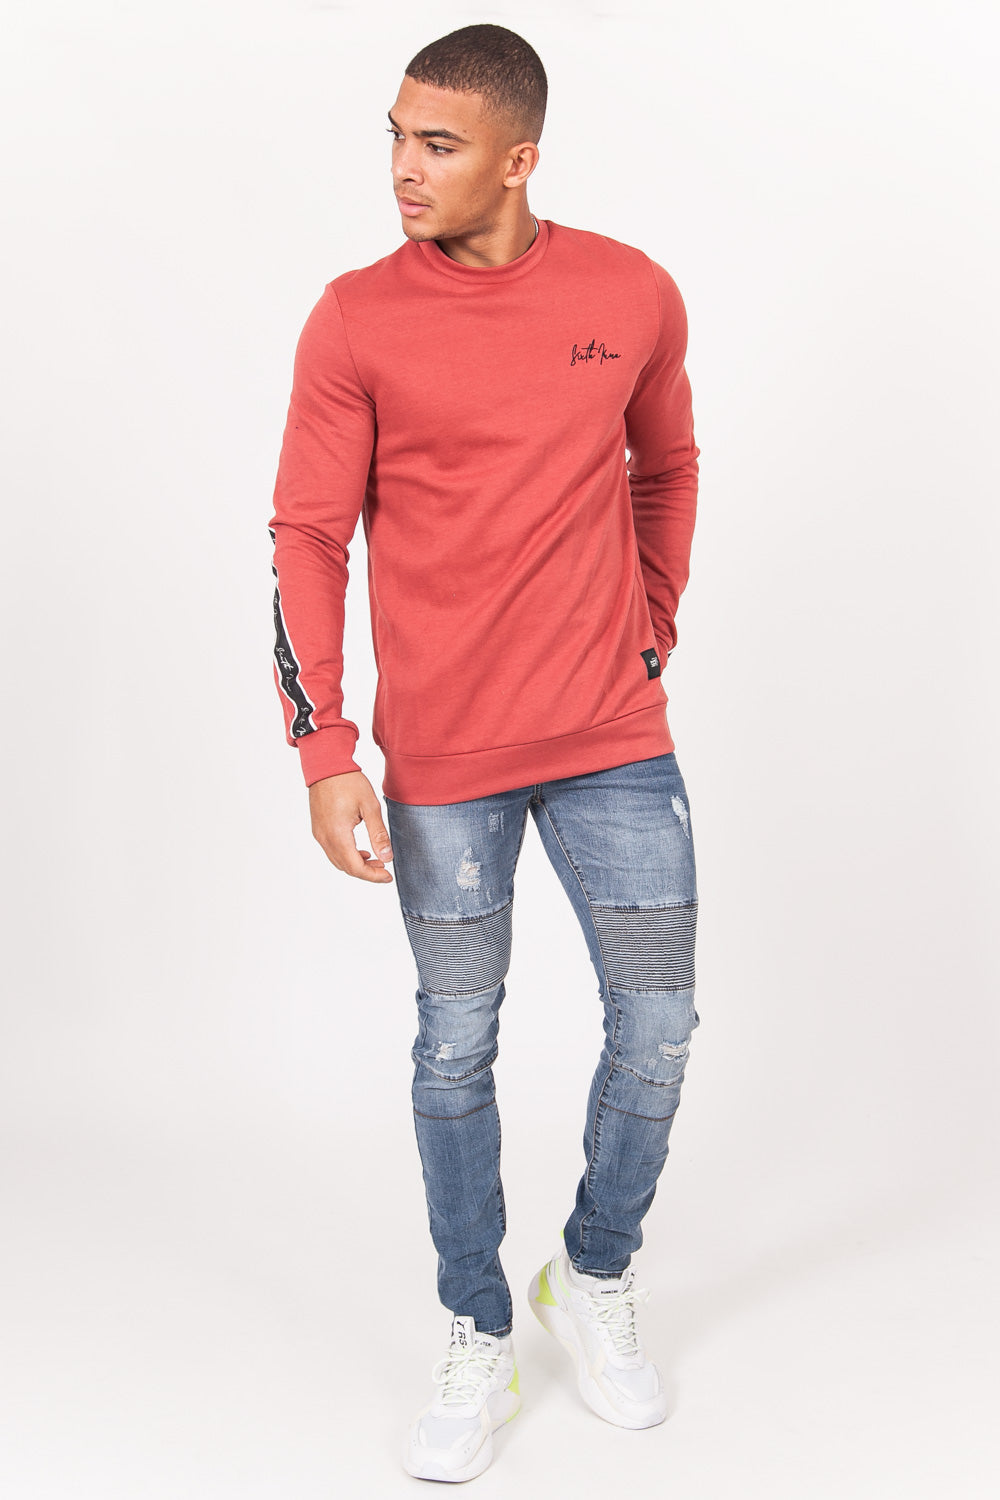 Sixth June - Sweatshirt bande dos rouge